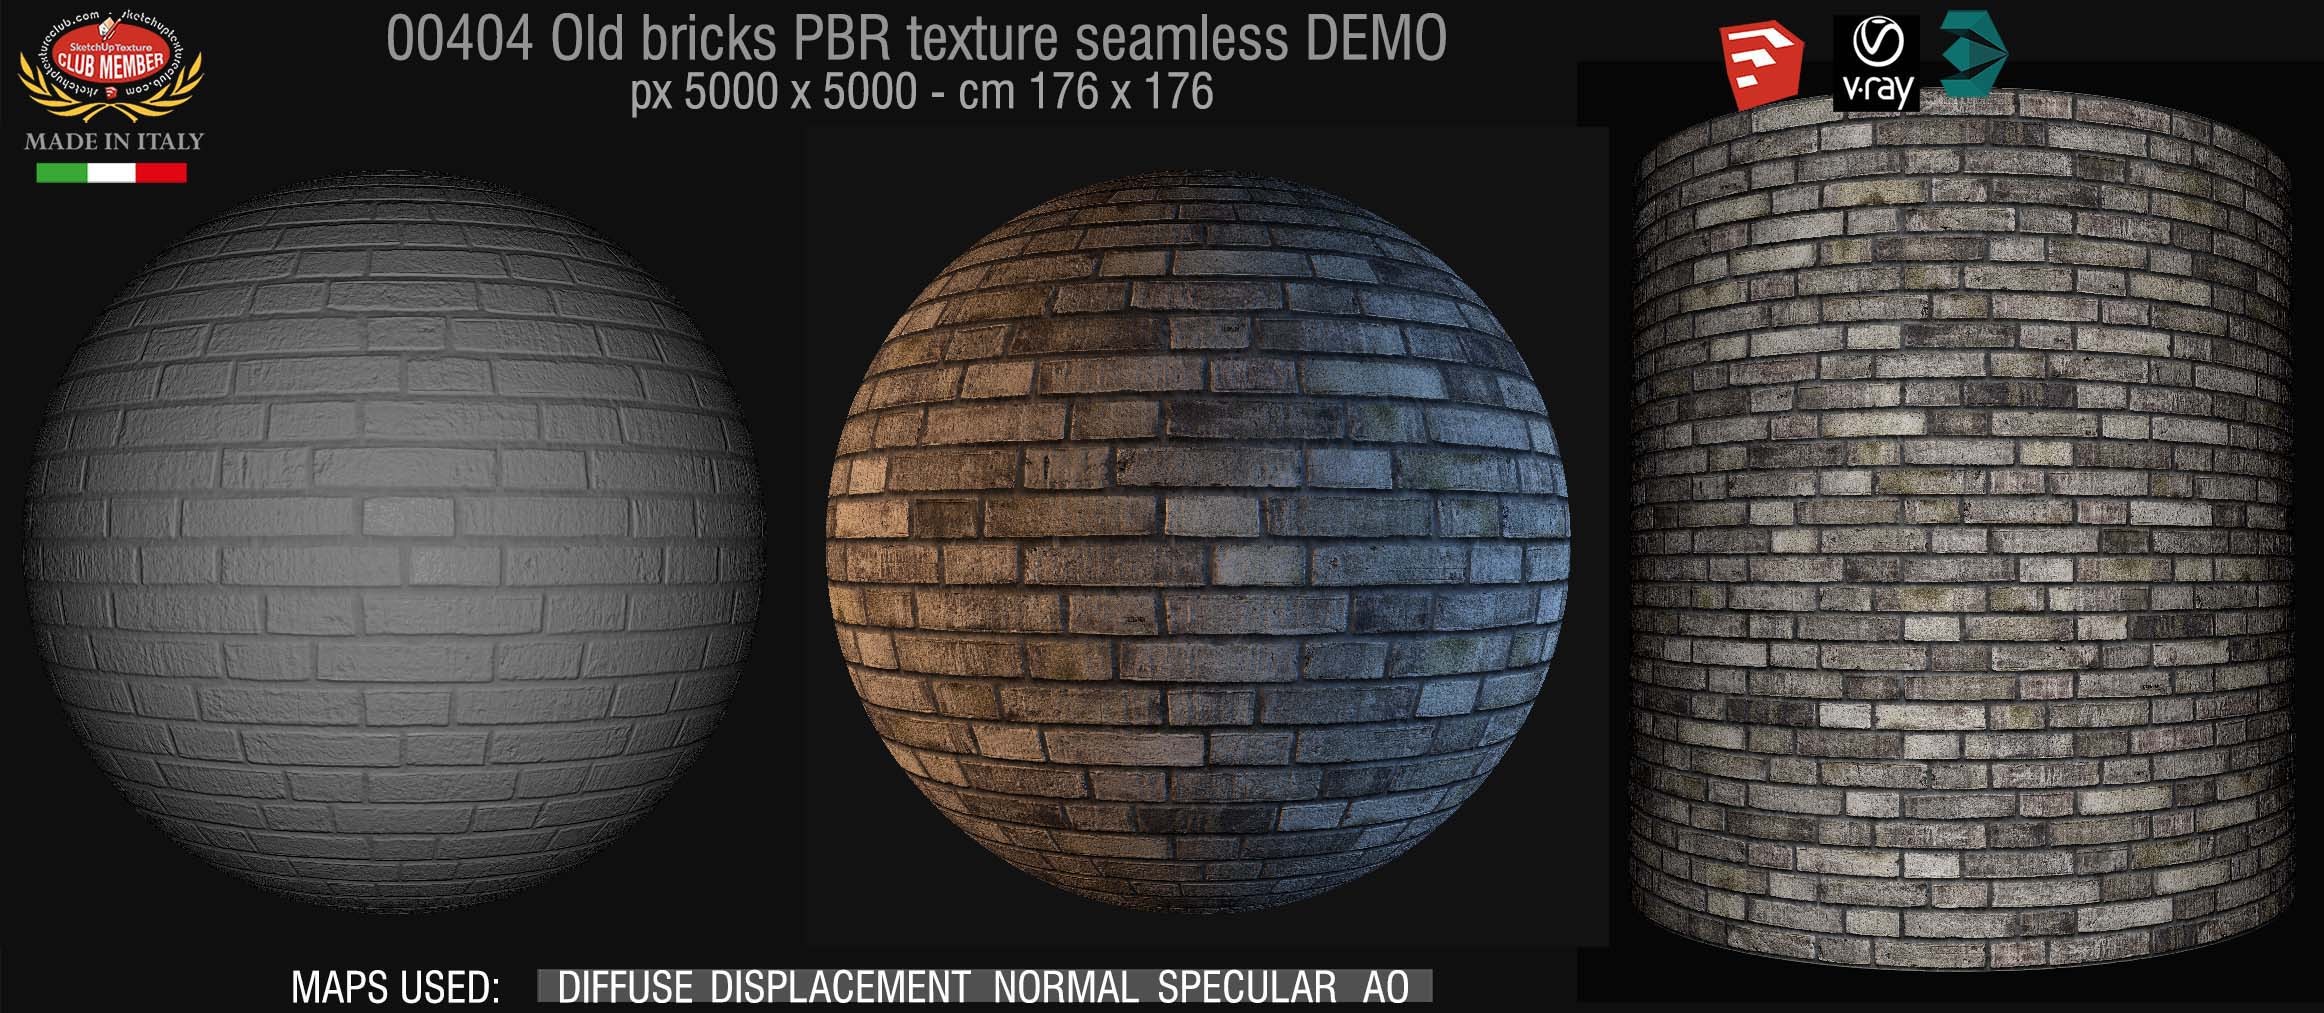 00404 Old bricks PBR texture seamless DEMO